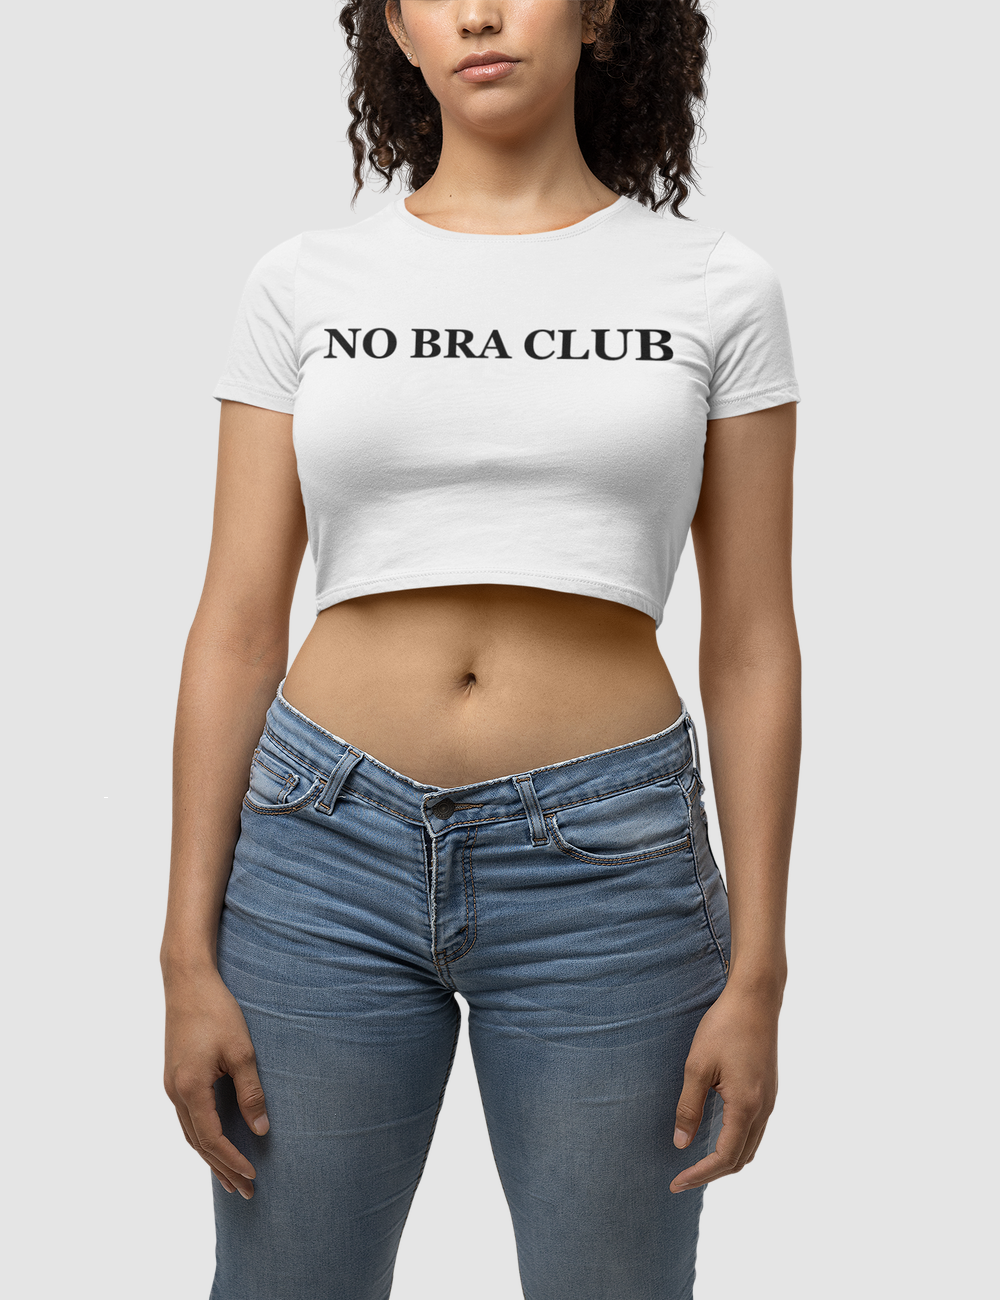 No bra club crop top – Iconic Trendz Boutique